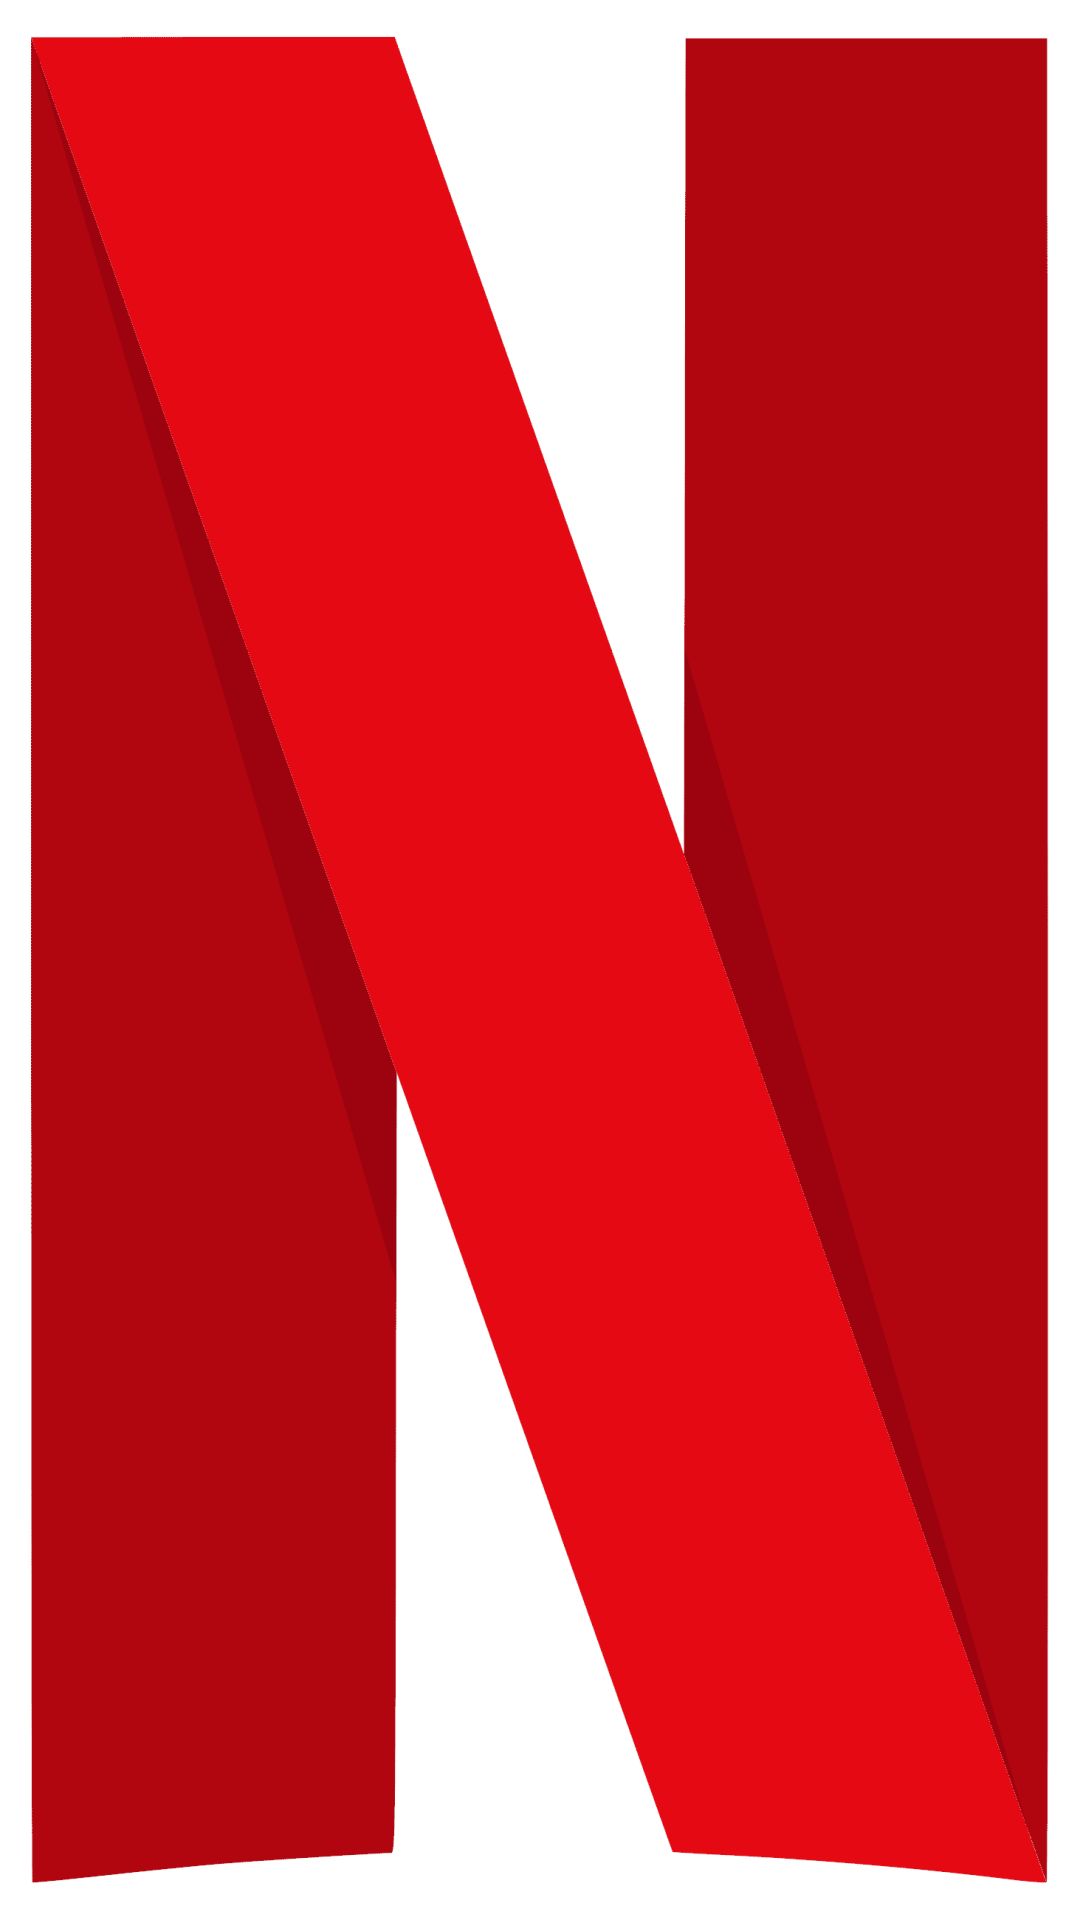 netflix, technology, logo